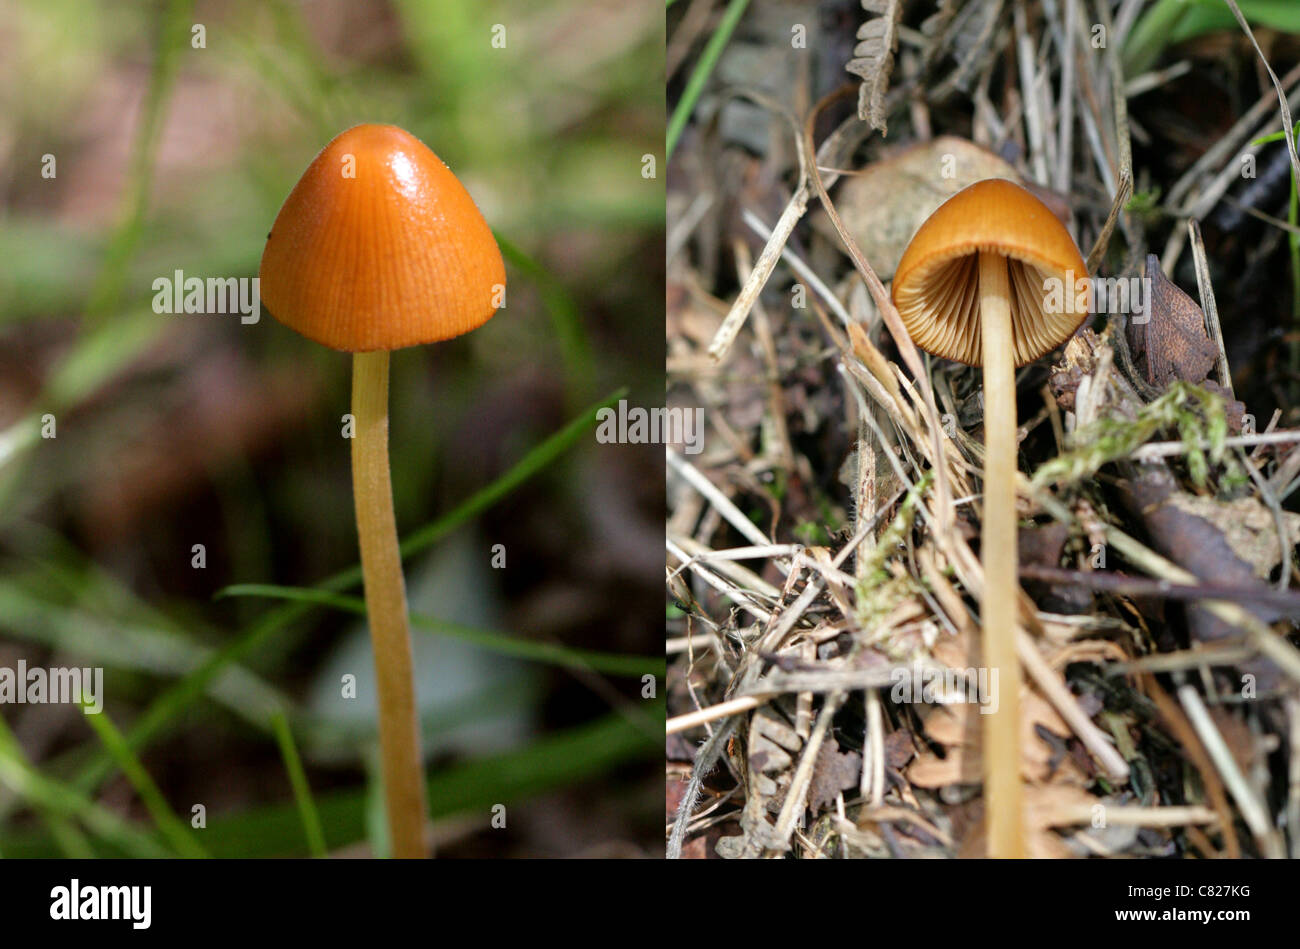 Conical Brittlestem, Psathyrella conopilus, Psathyrellaceae. Syn. Psathyrella subatrata. Two Image Composite Showing Cap & Gills Stock Photo